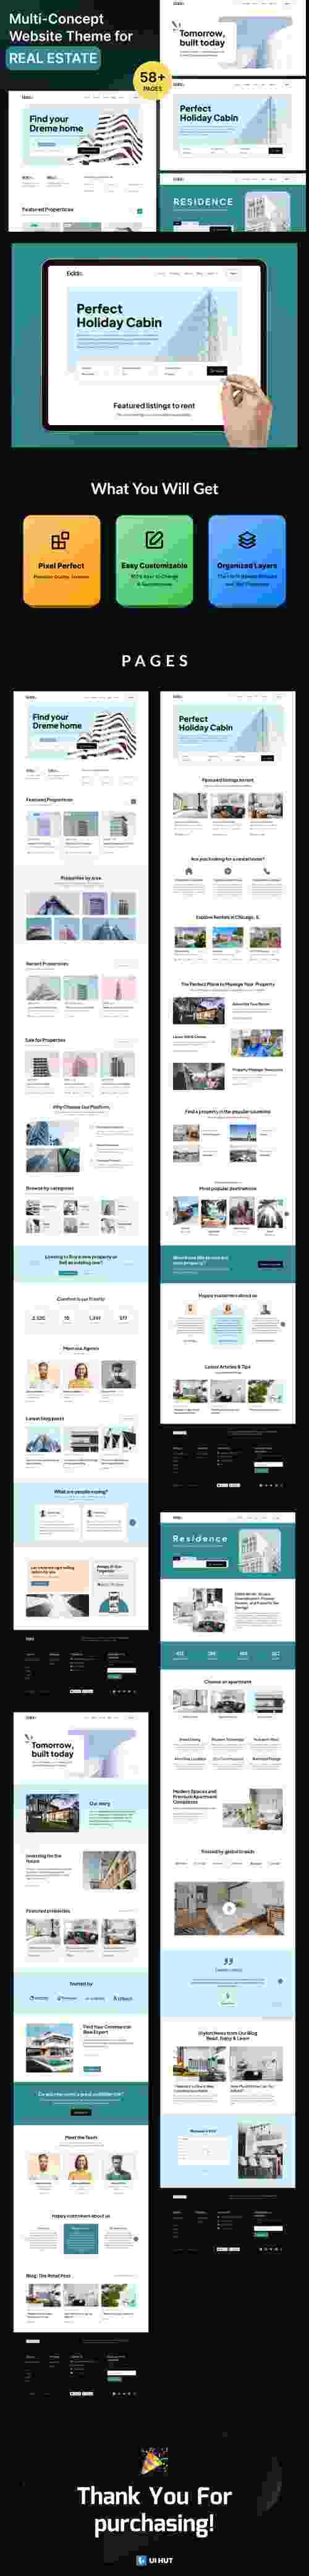 UIHut - Multi-Concept Website Theme for Real Estate - 25269